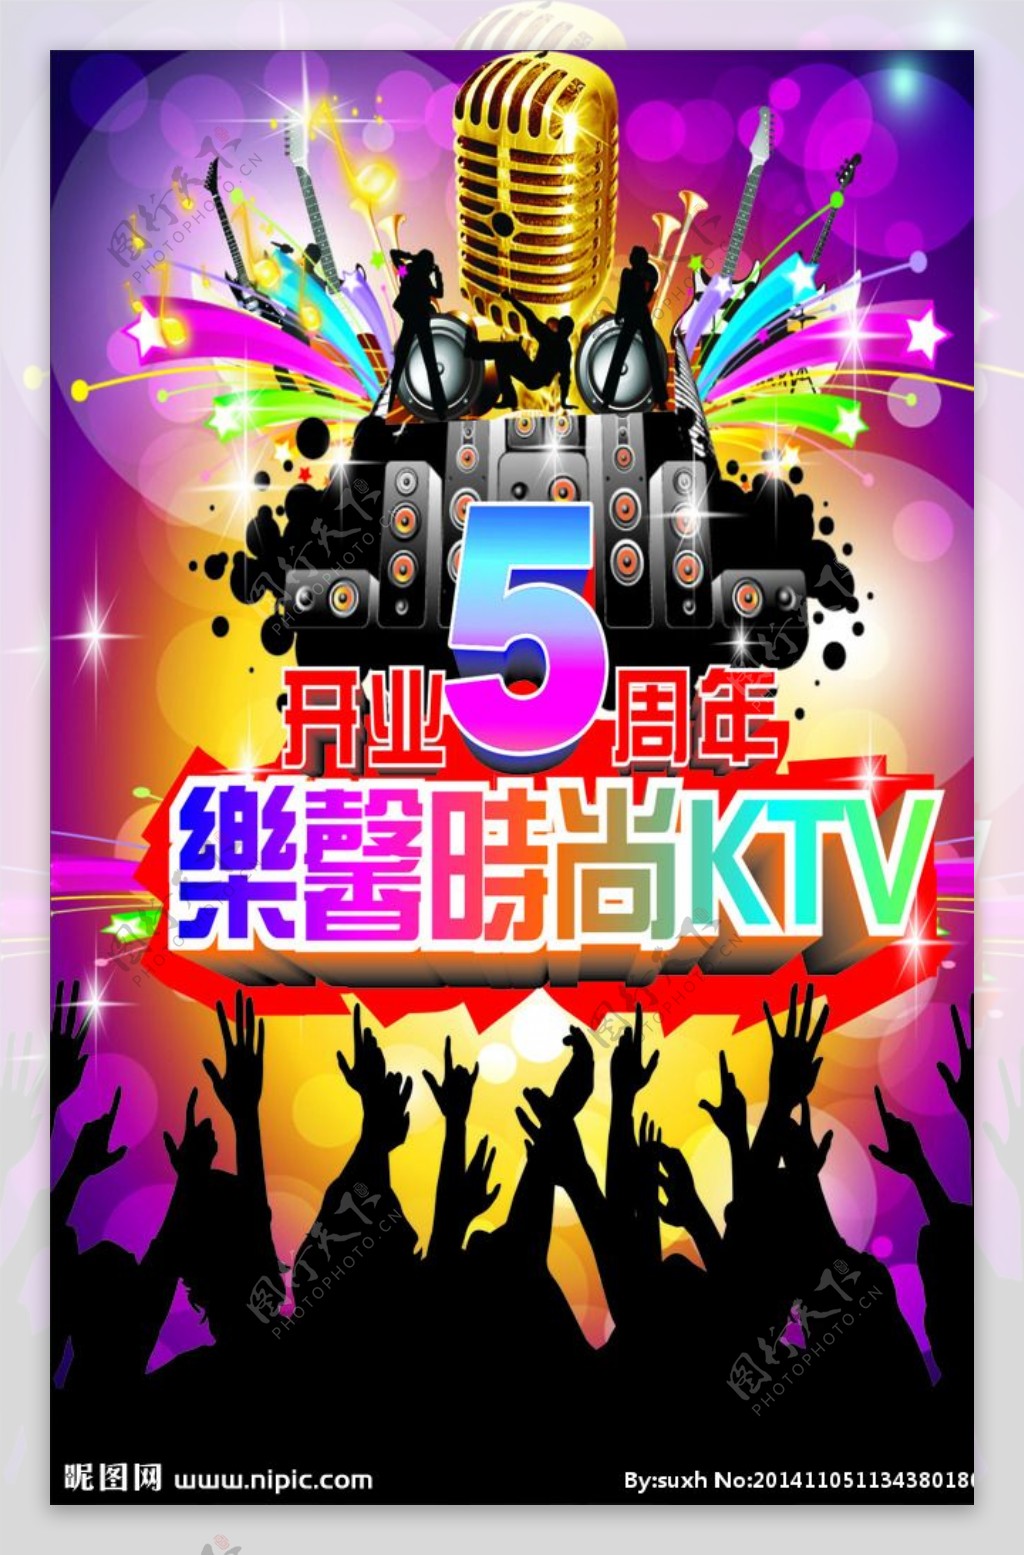 KTV周年庆图片